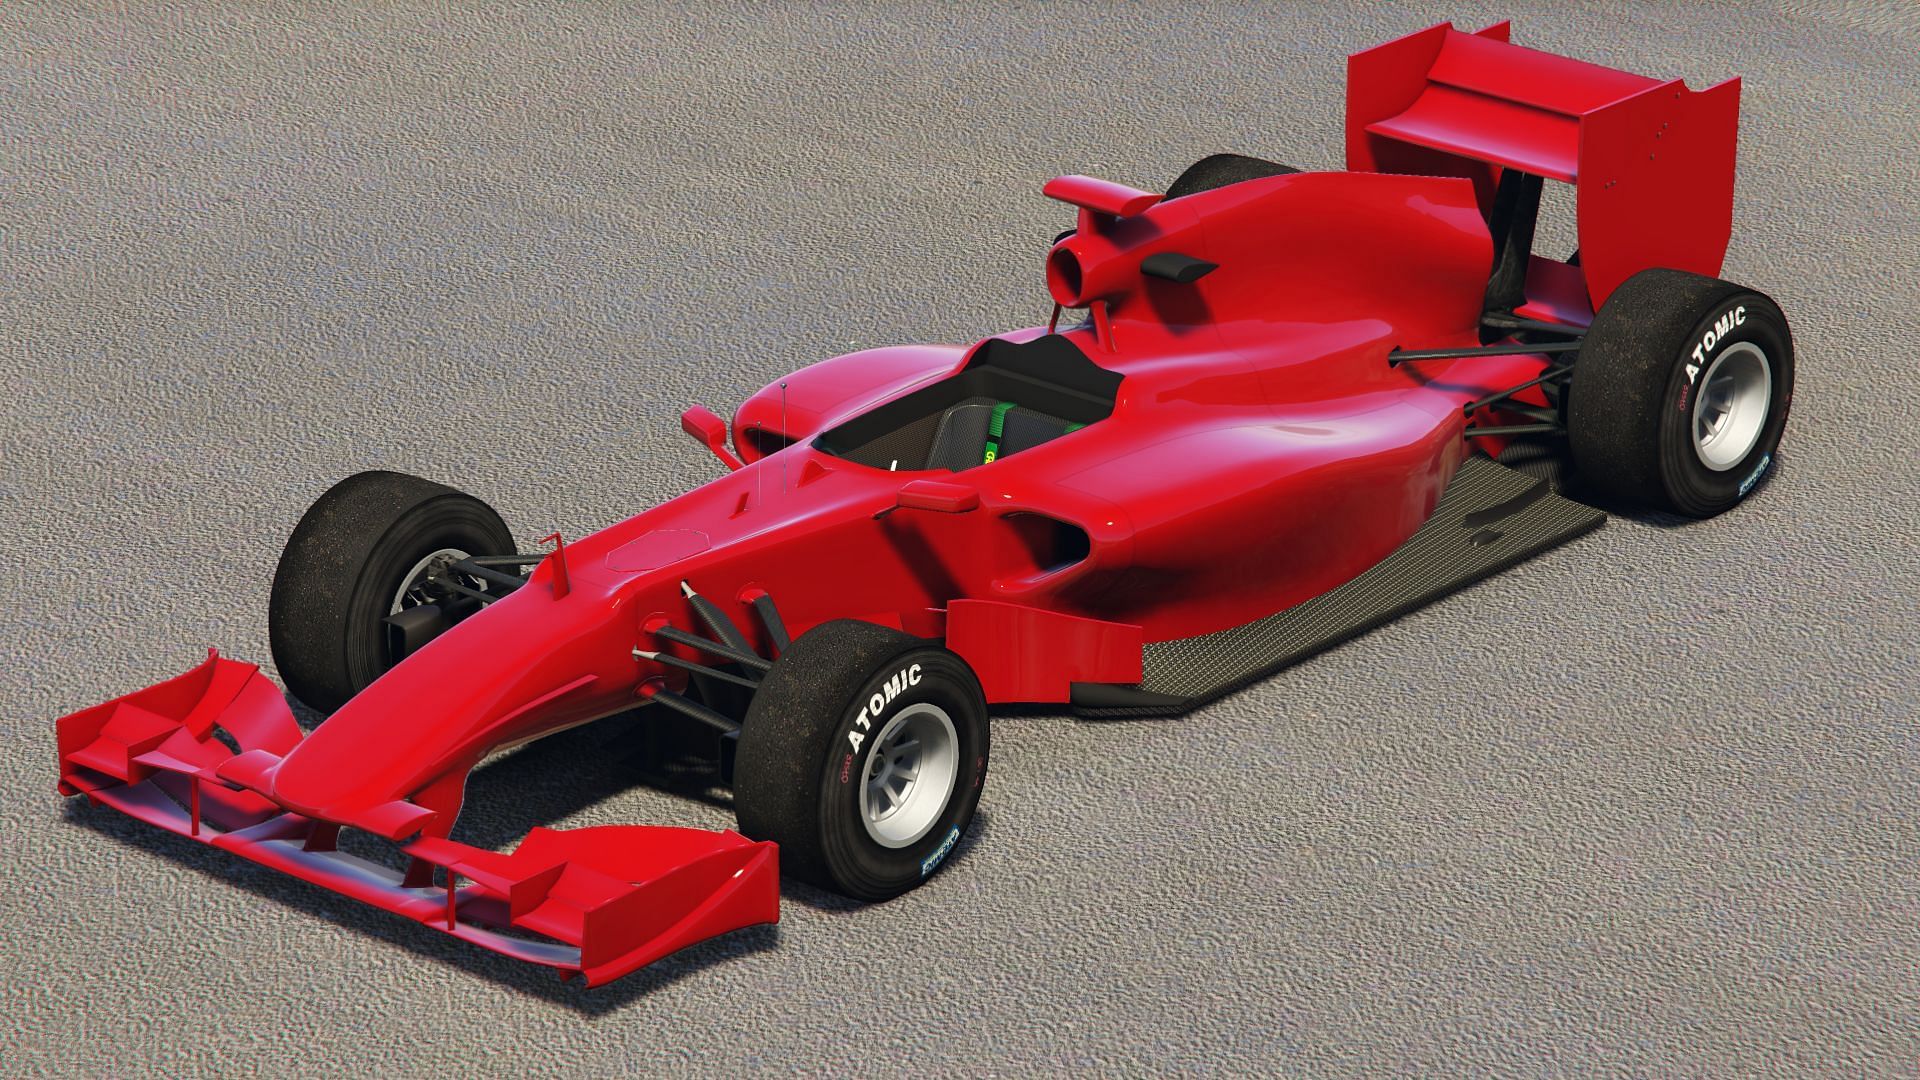 A standard BR8 Formula 1 Car in GTA Online (Image via Rockstar Games || GTA Wiki)